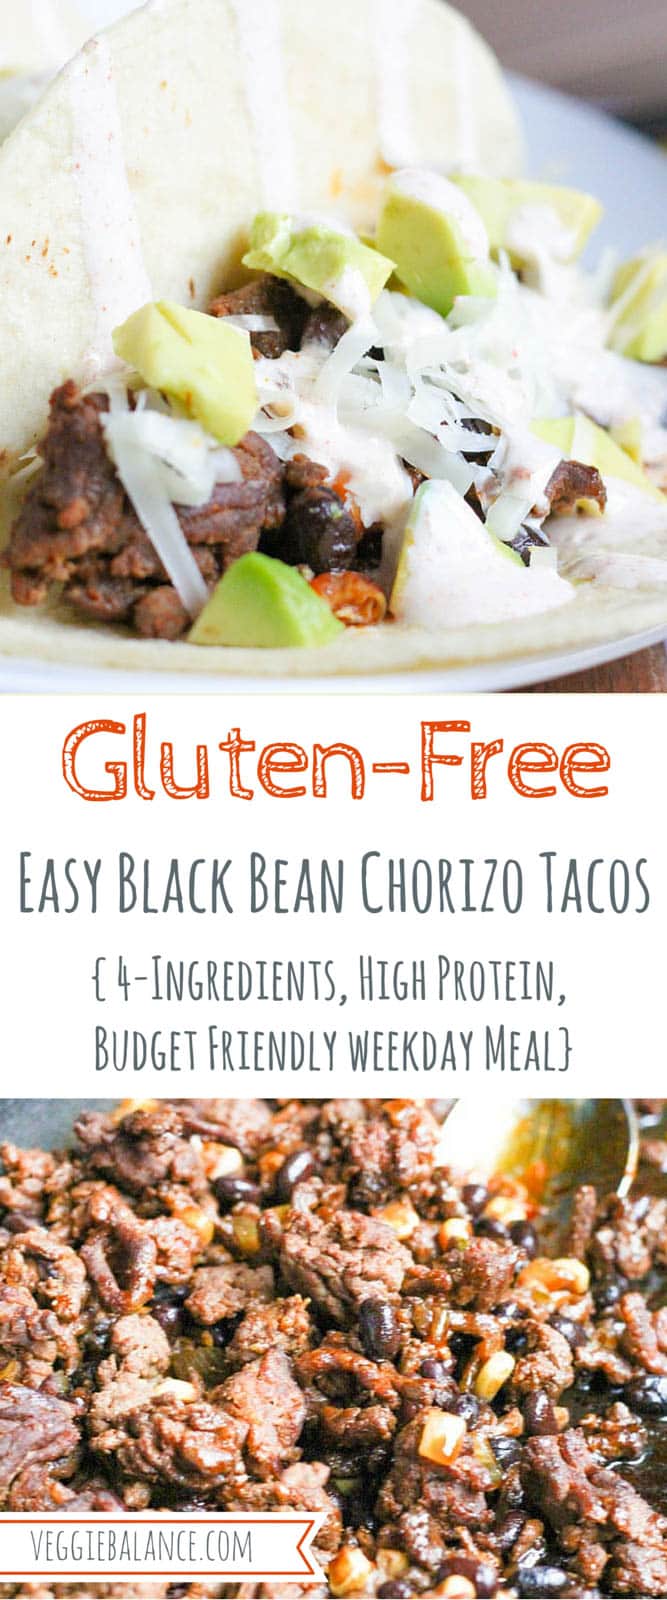 Chorizo Tacos with Black Beans - Veggiebalance.com